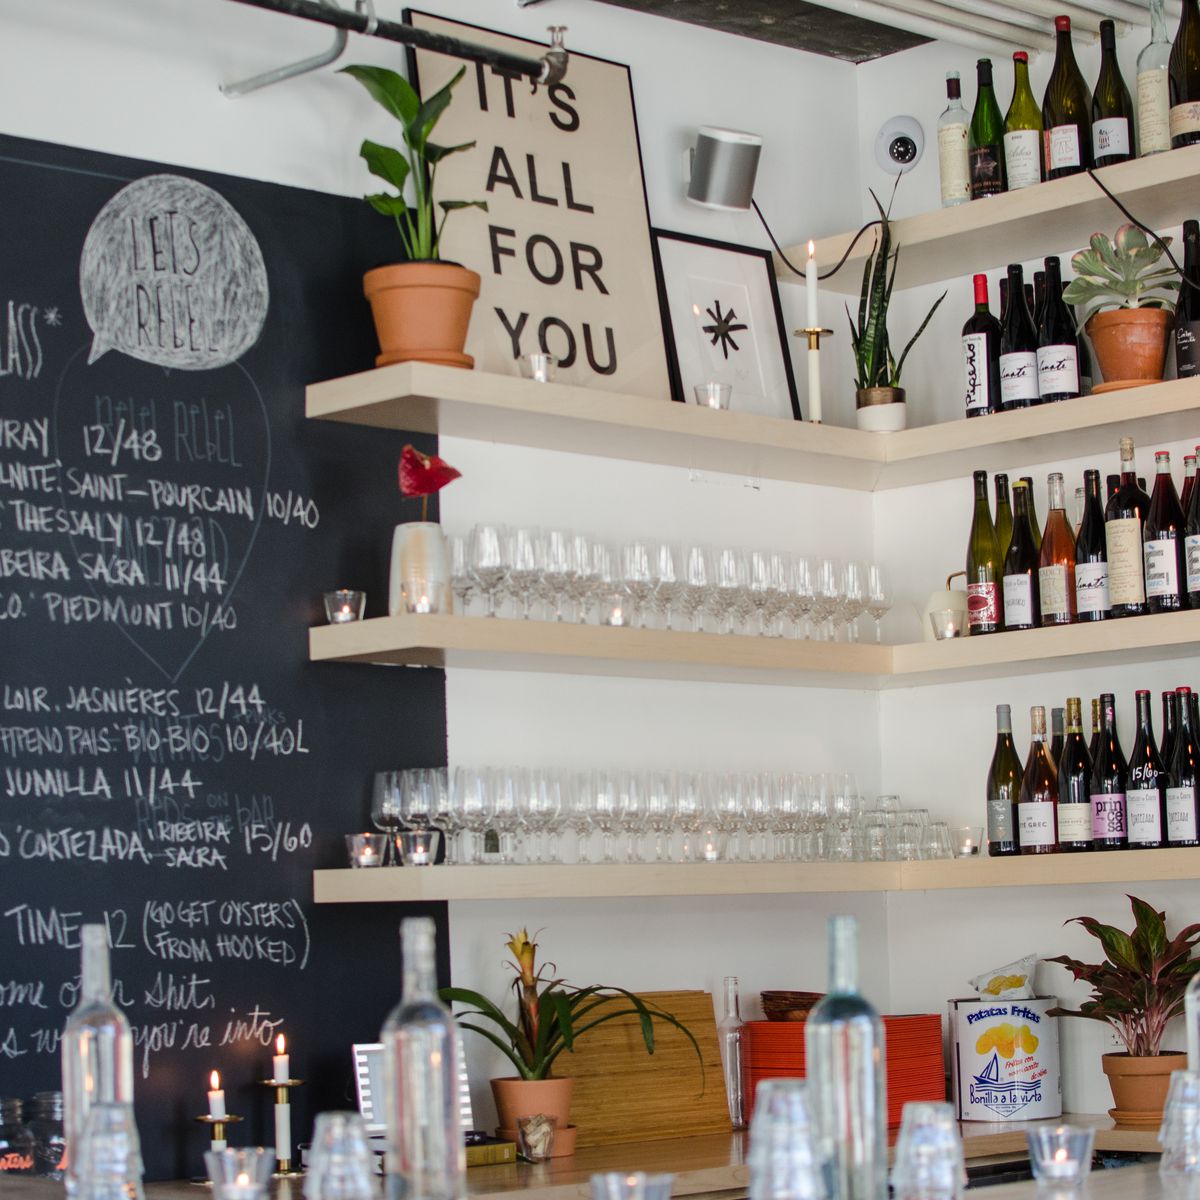 Shelves of wine bottles and a chalkboard menu inside a wine bar